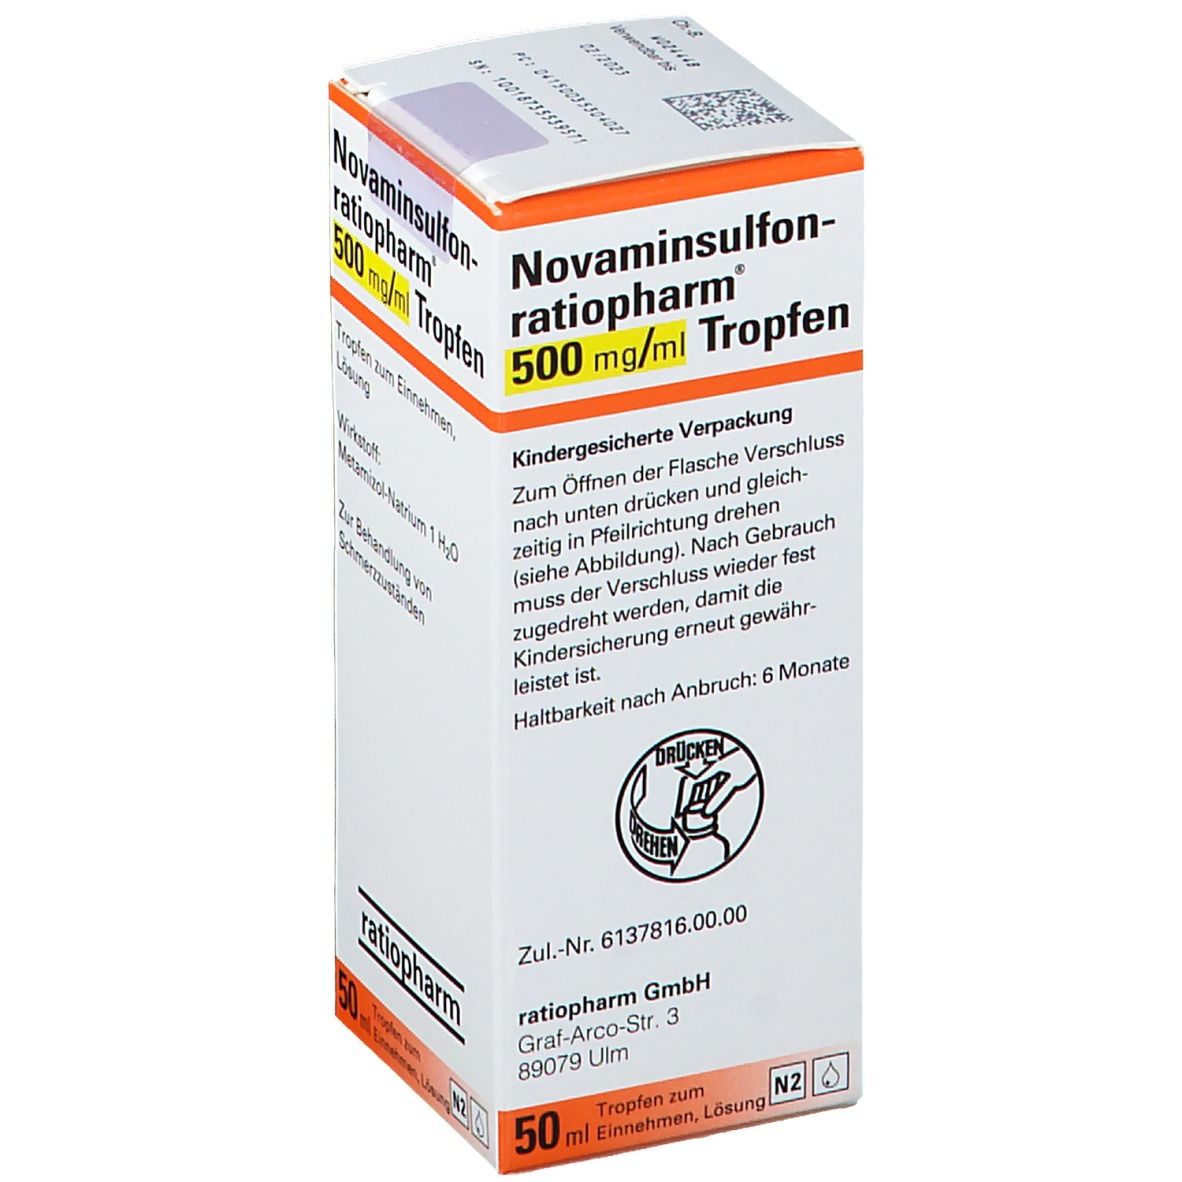 Novaminsulfon-ratiopharm ® 500 mg/ml Tropfen.